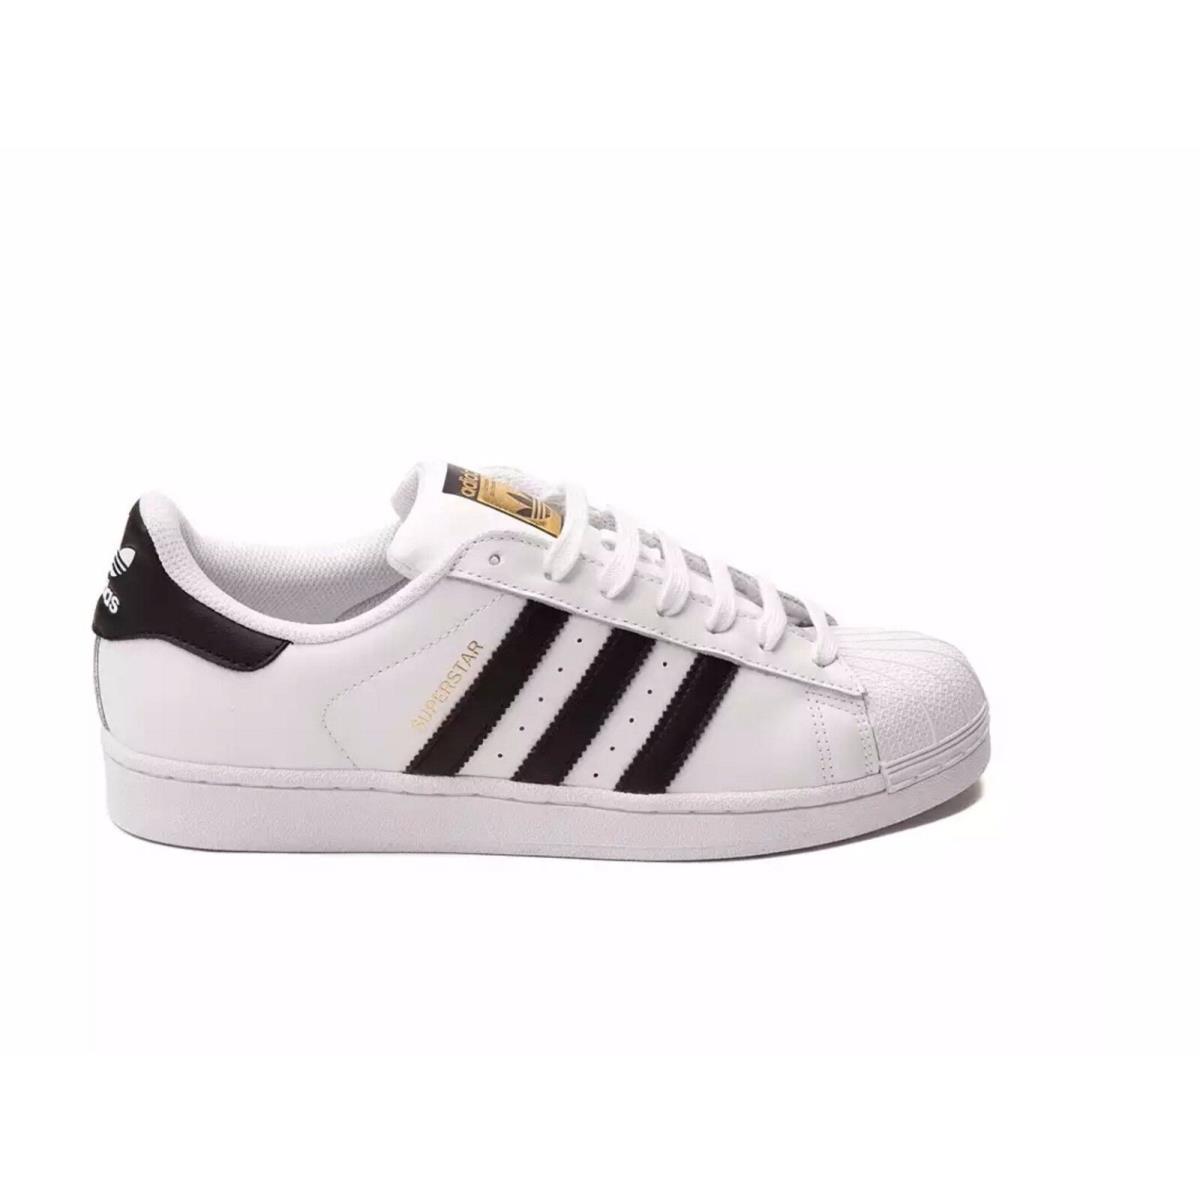 Mens Adidas Originals Superstar II 2 Shelltoe Athleticwhite Black All Sizes - White